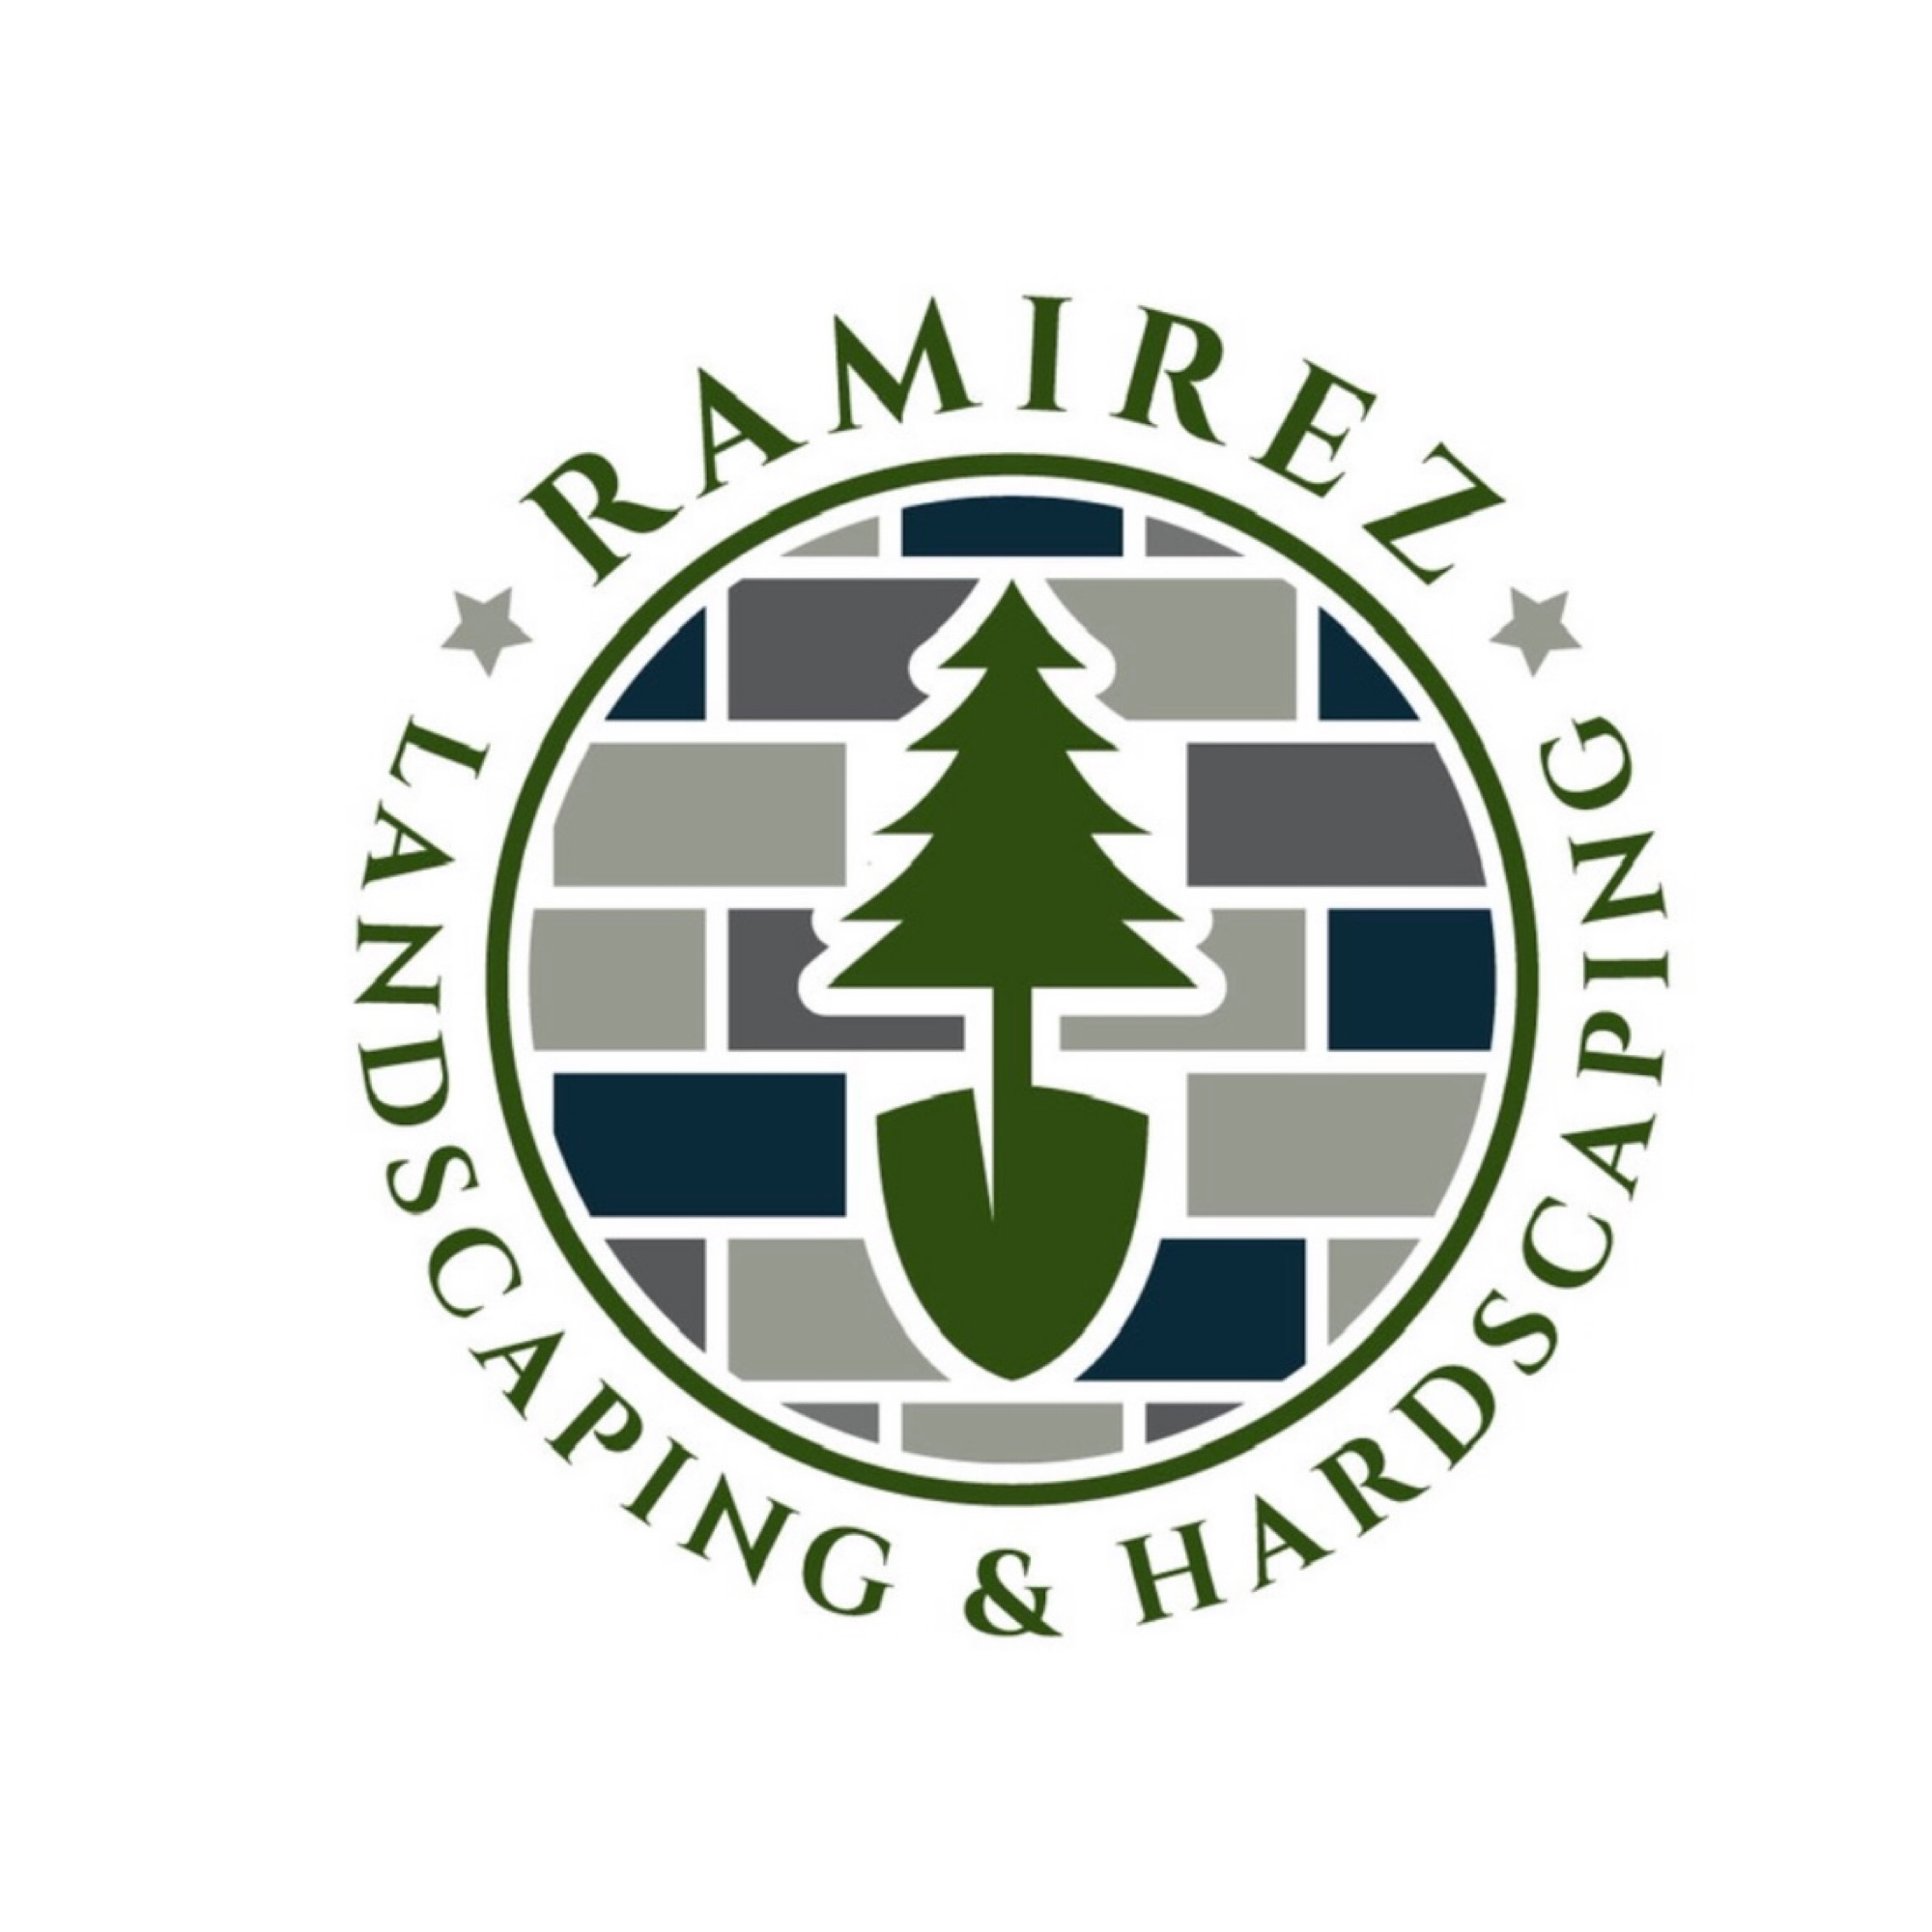 Ramirez Landscaping Logo